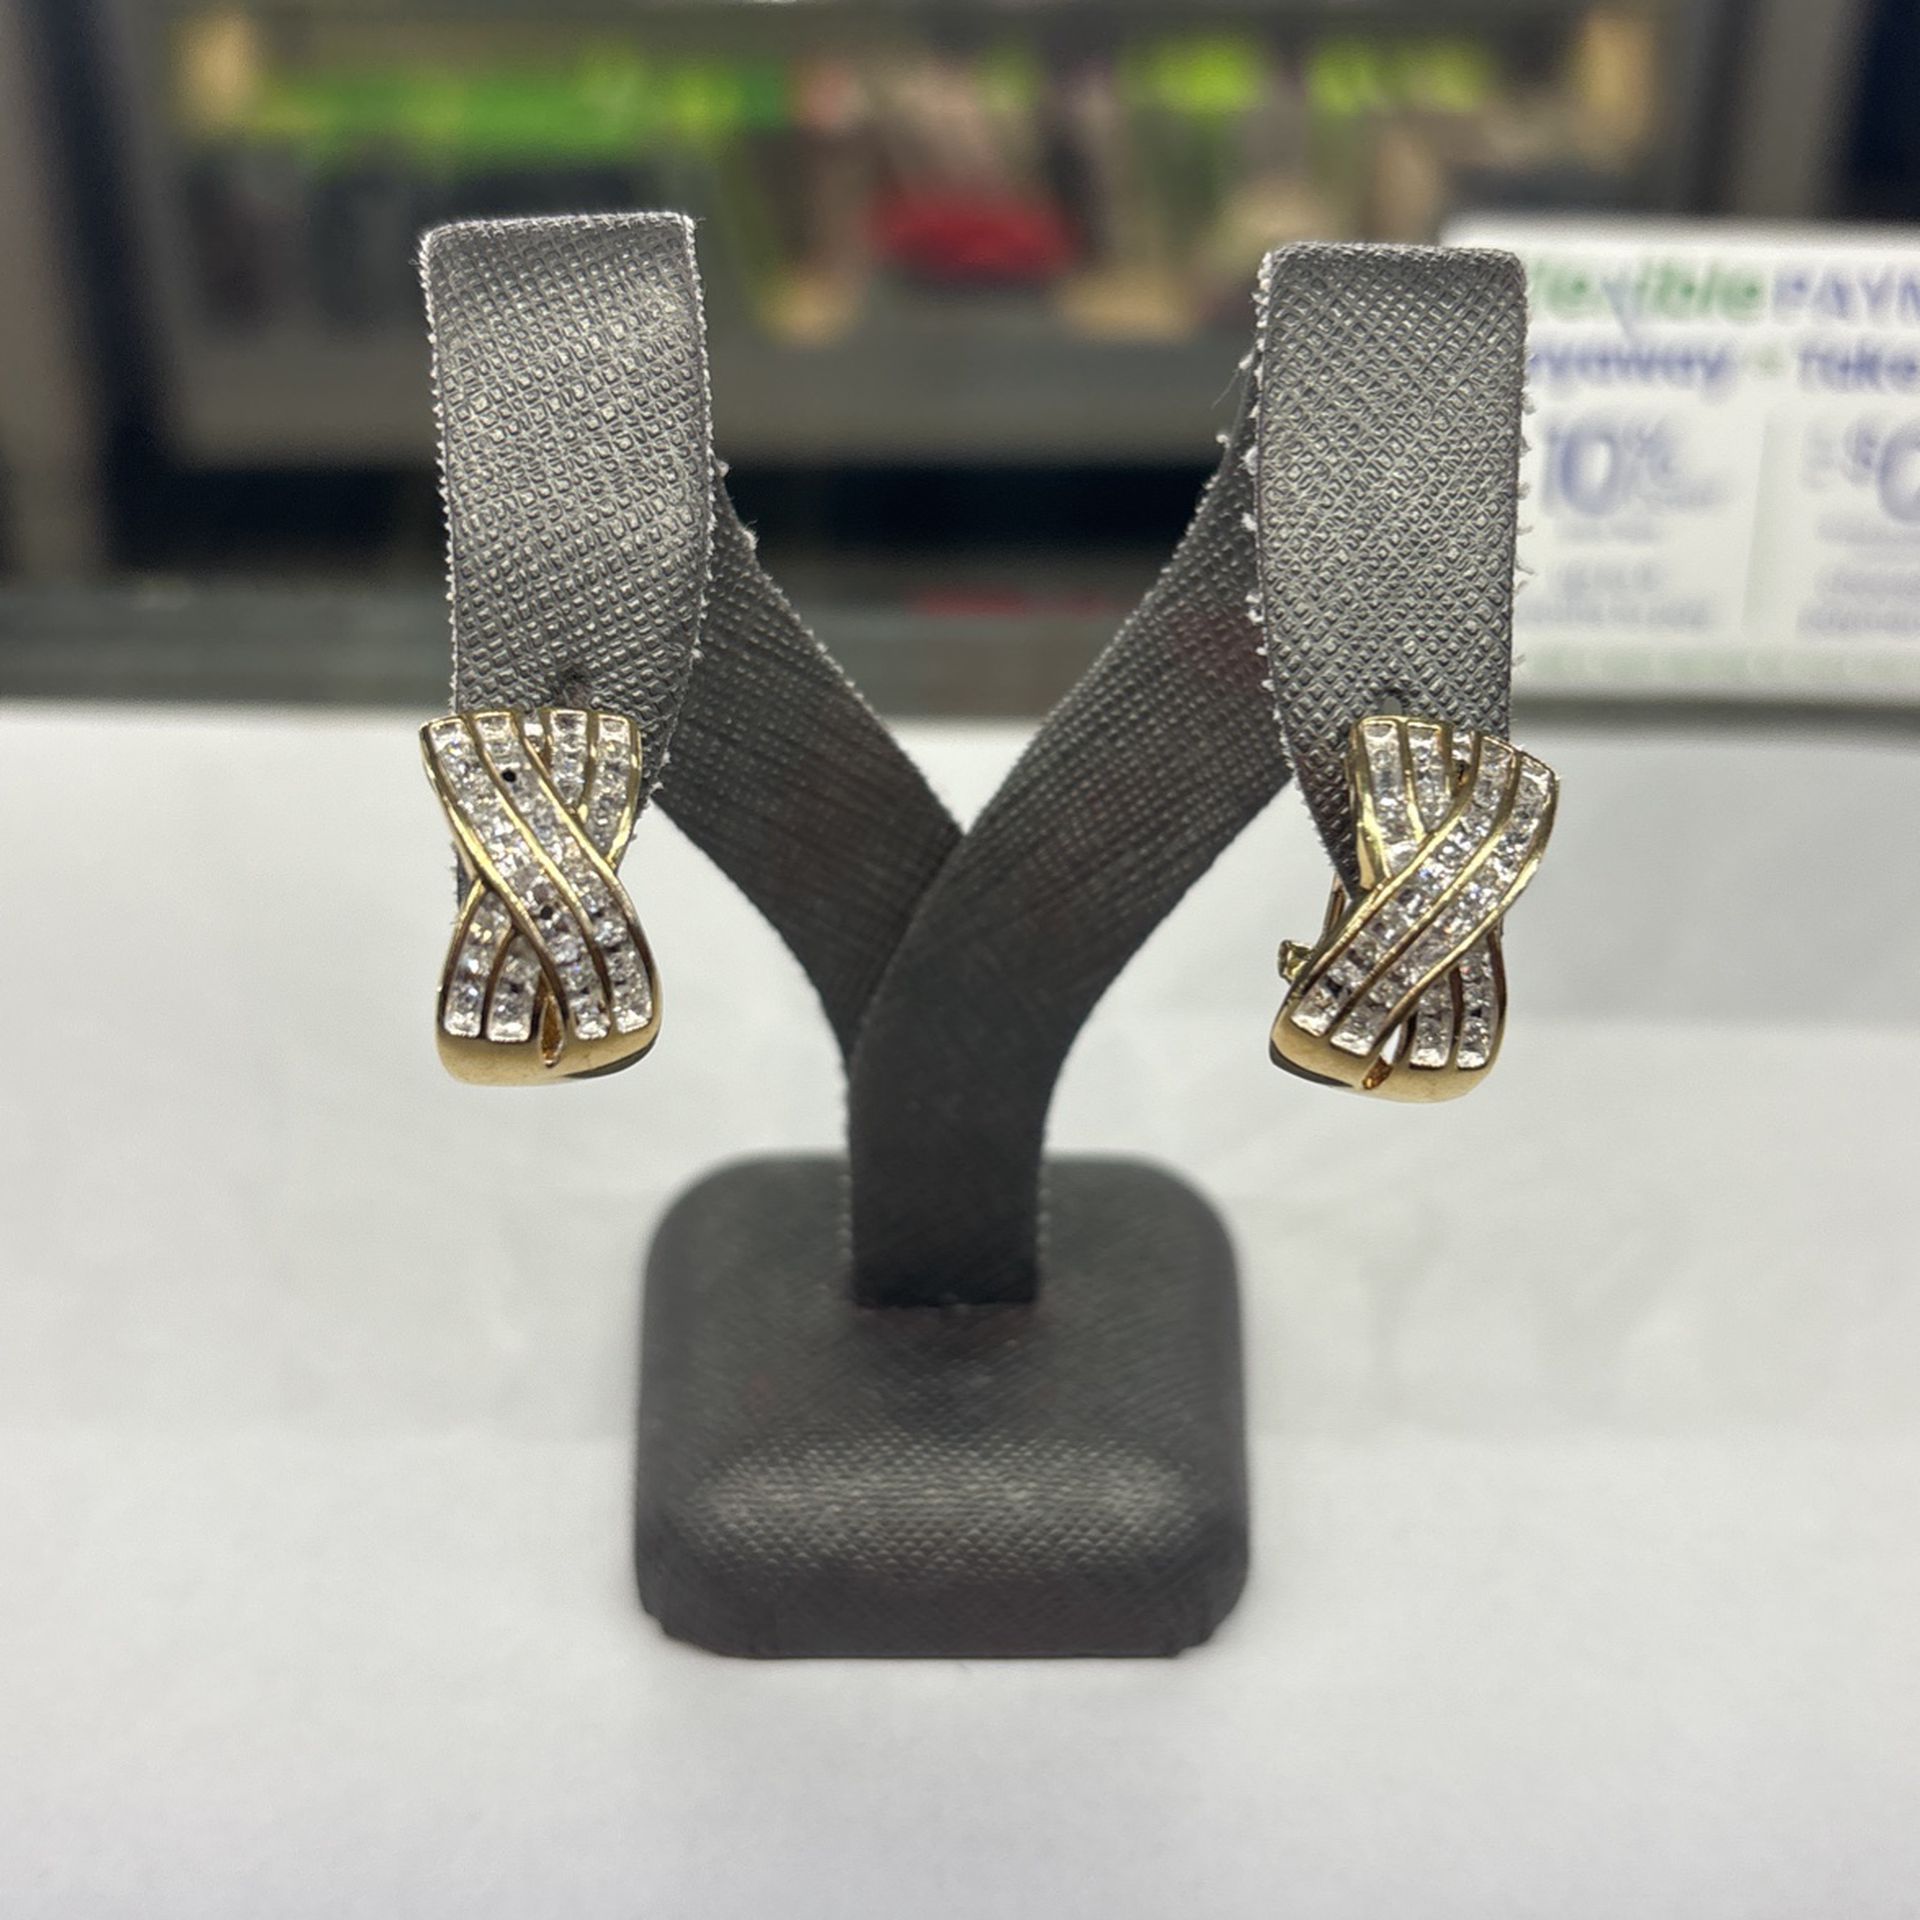 10k Gold Diamond Earrings Weight 1.1 Grams 